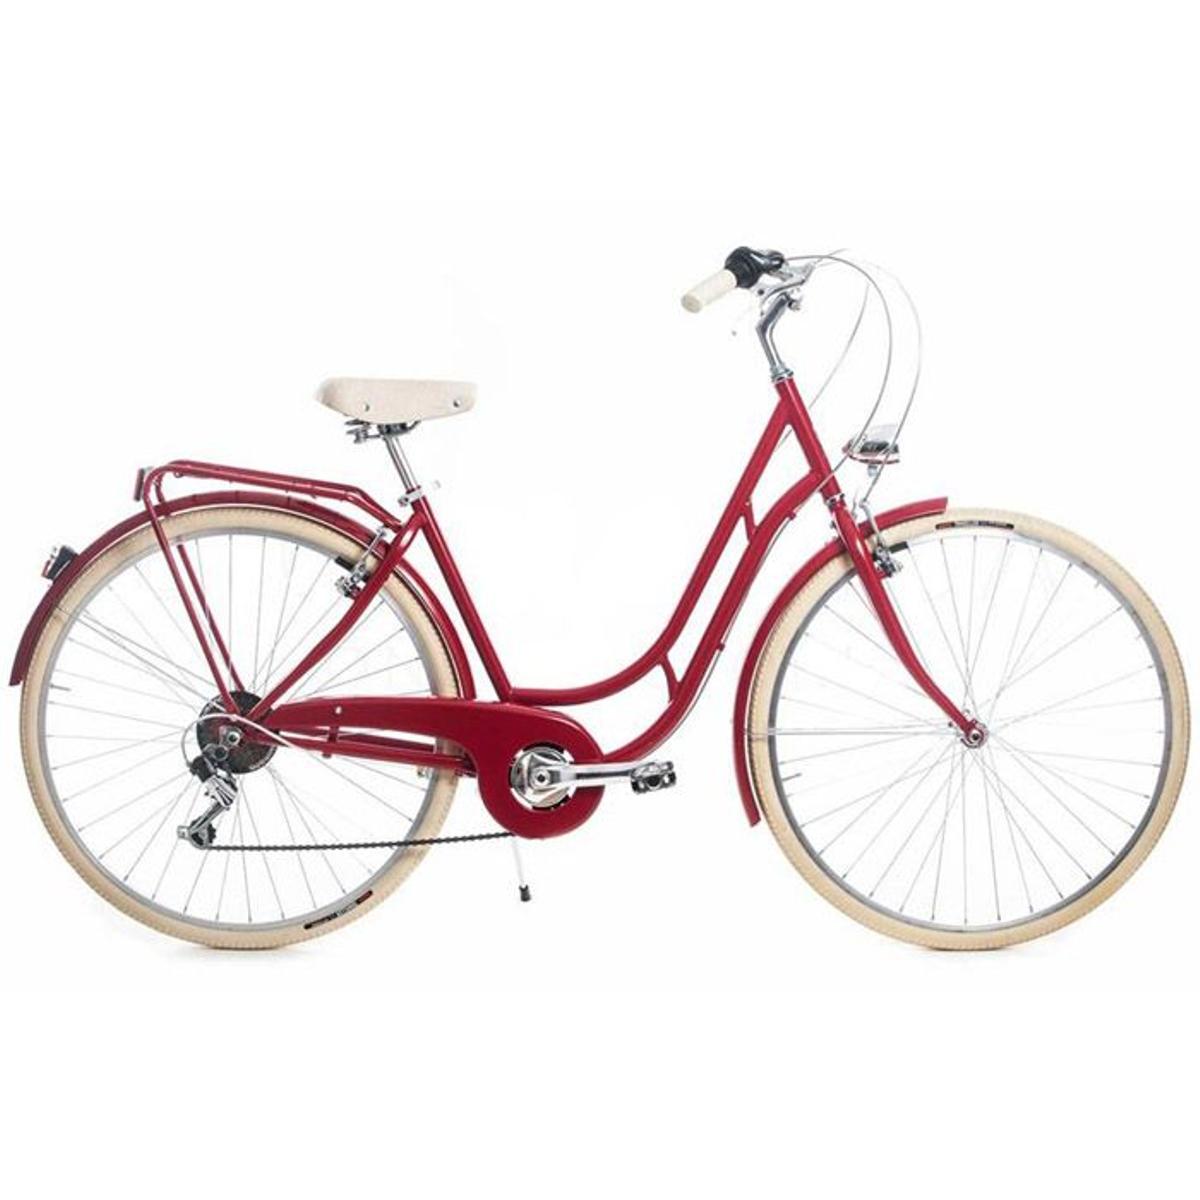 San Valentín 2015: bicicleta Mimub.com